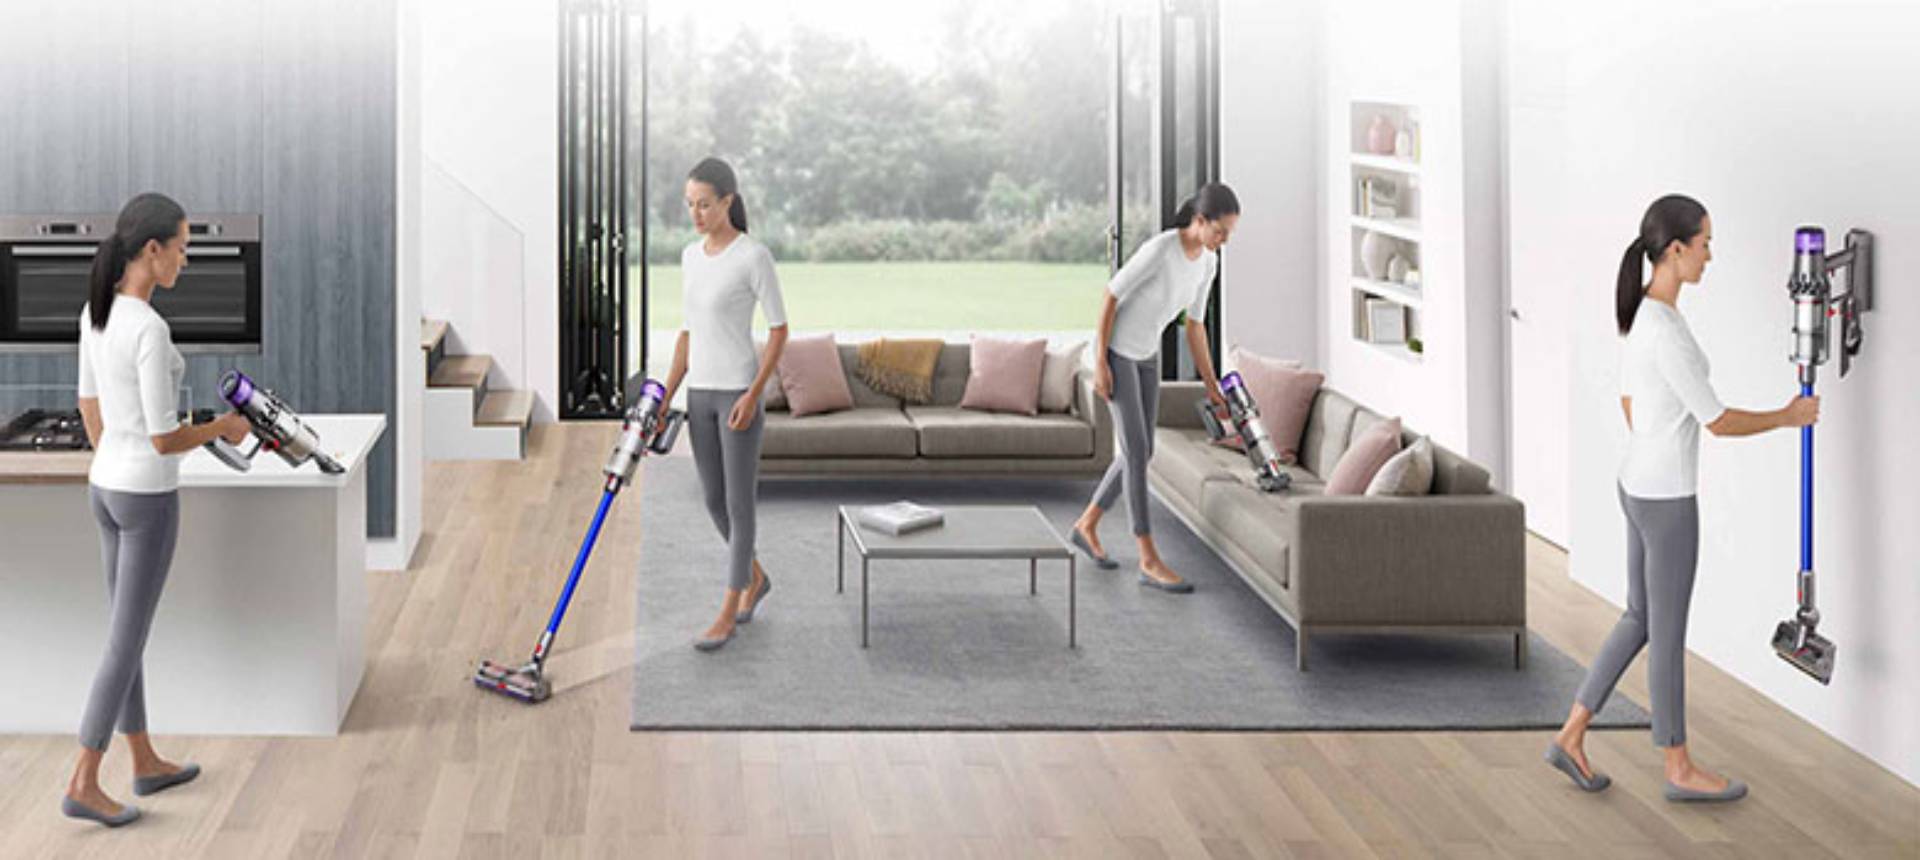 Dyson Cordless Vacuum The Best, Best Dyson For Laminate Floors